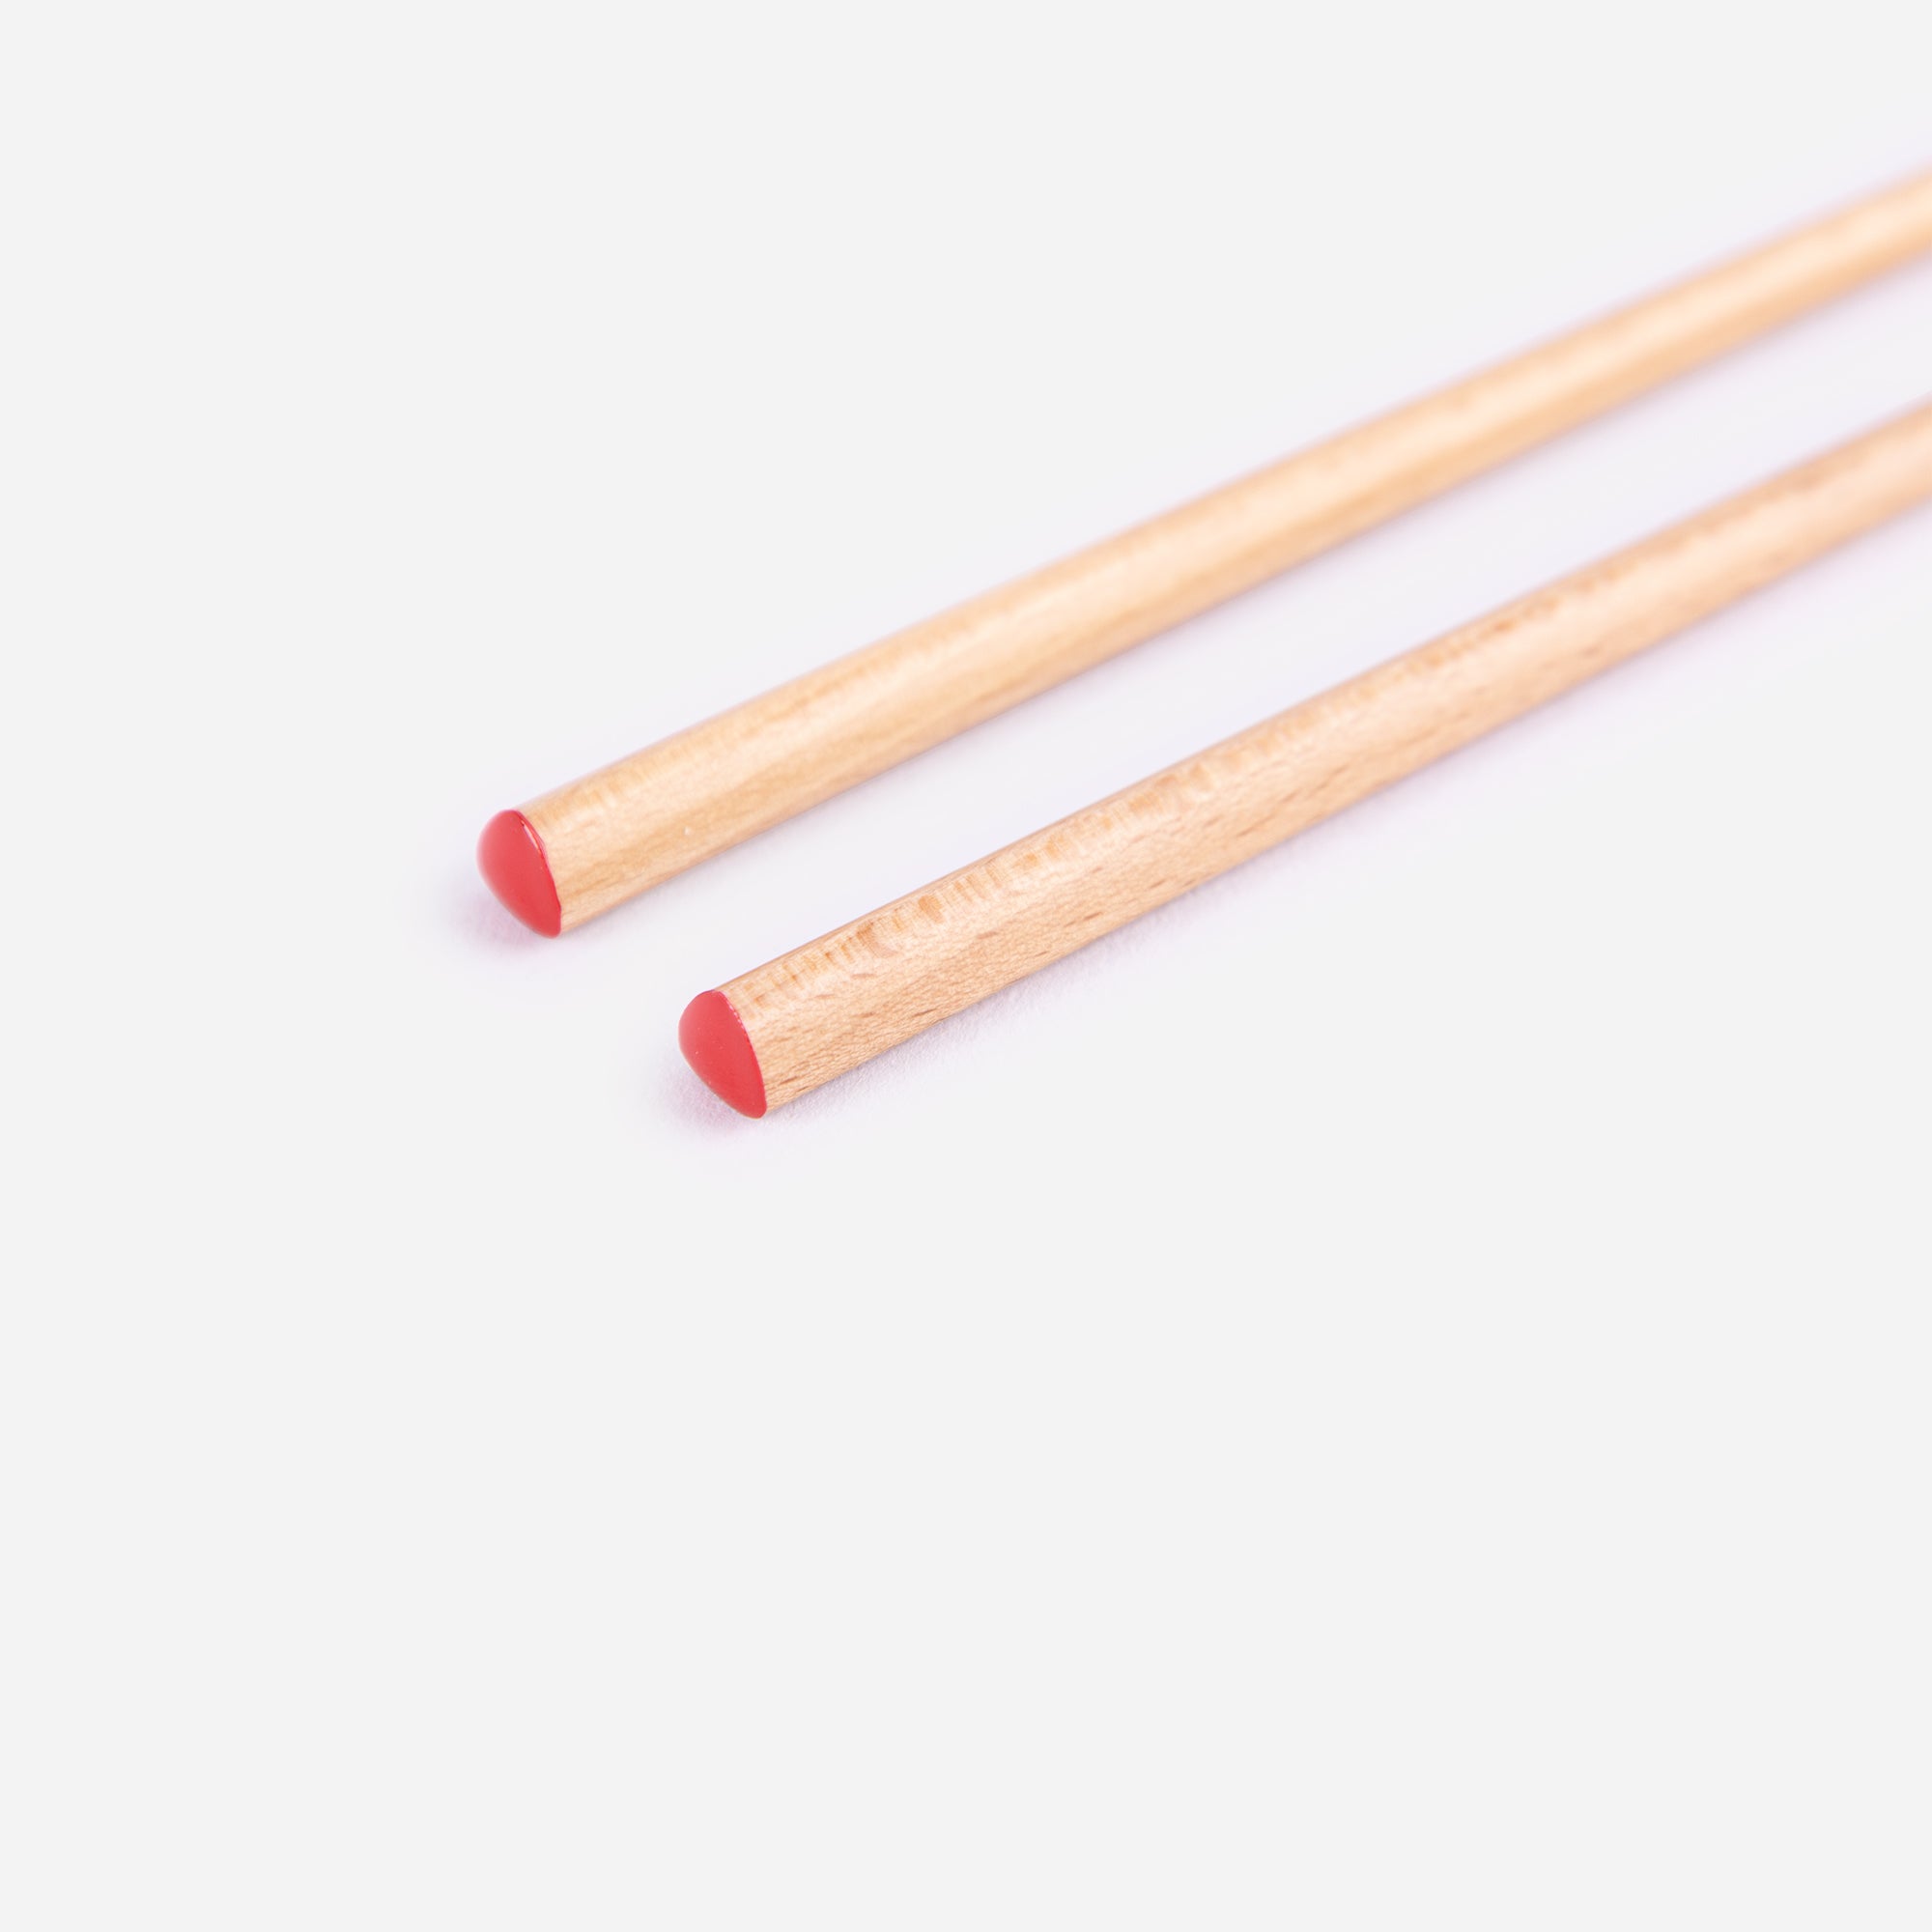 Graf chopstick | Short